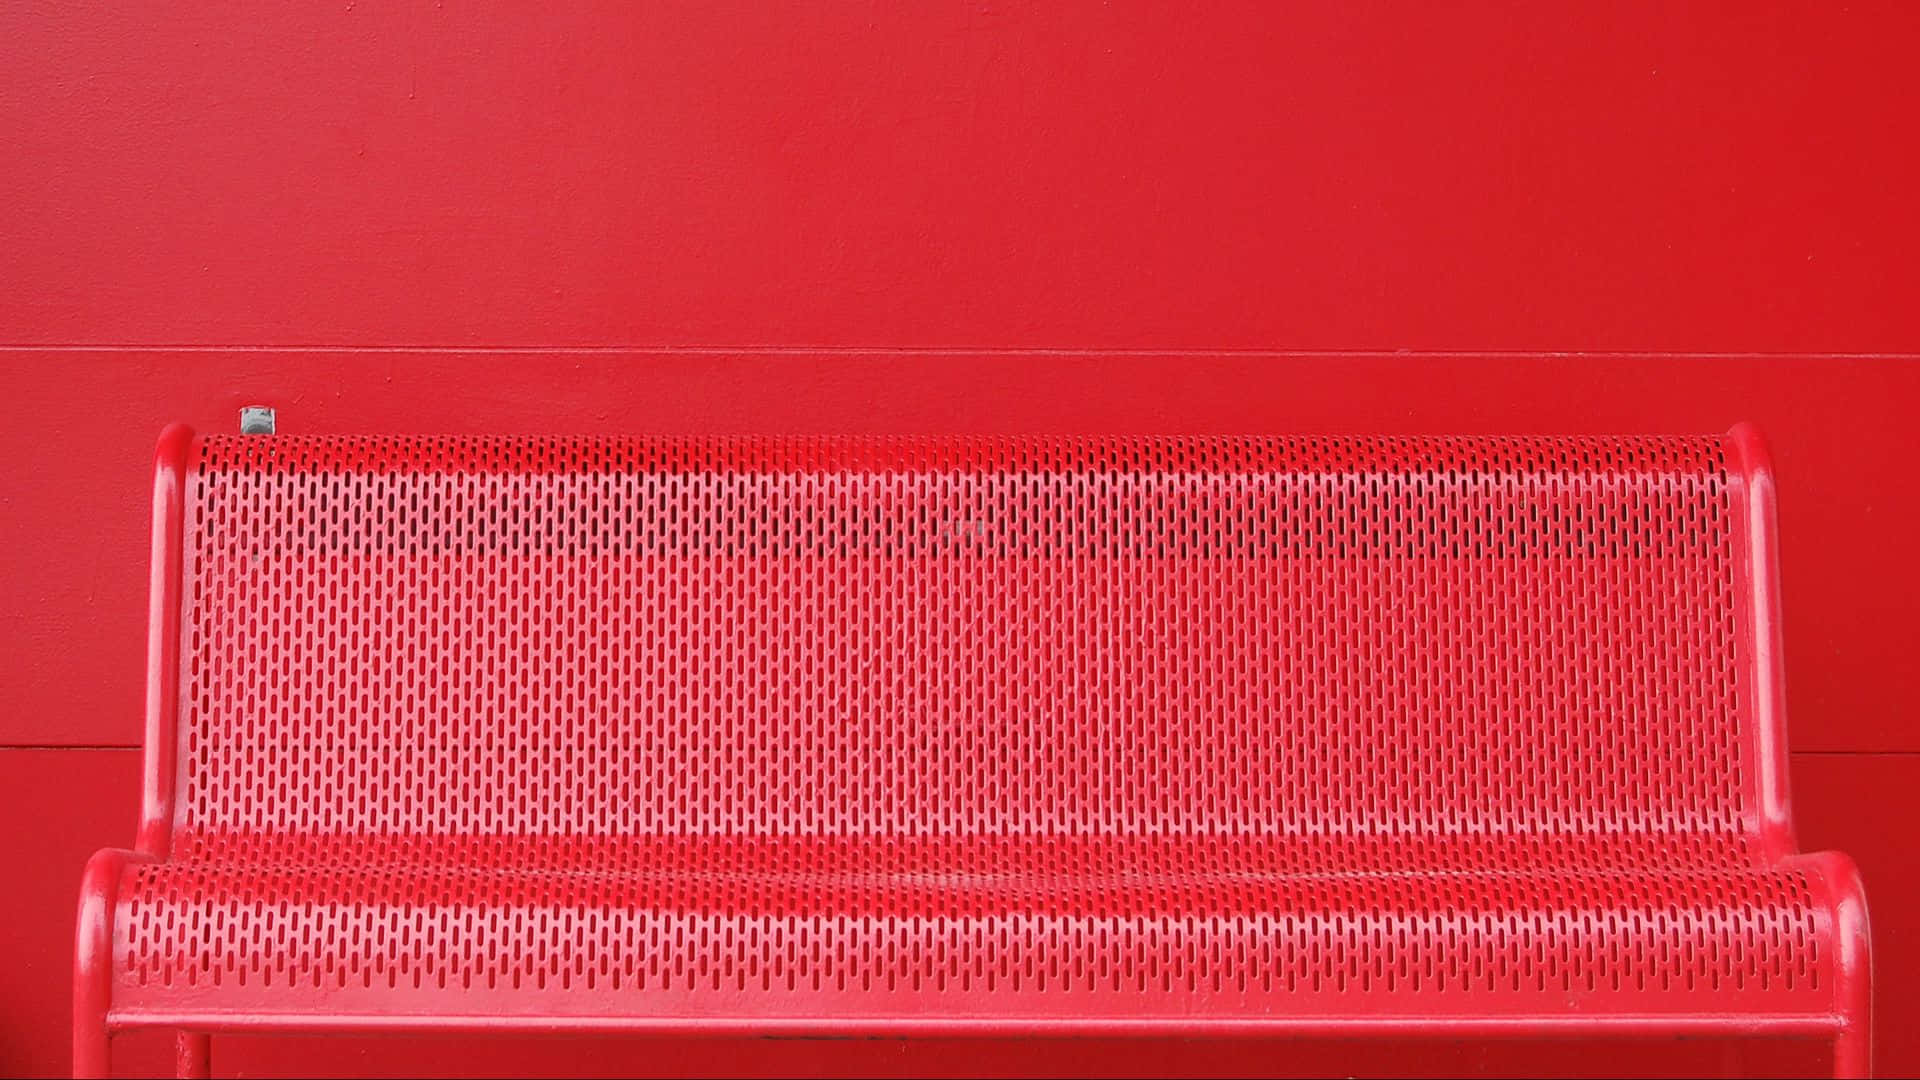 1920x1080 Red Wallpaper